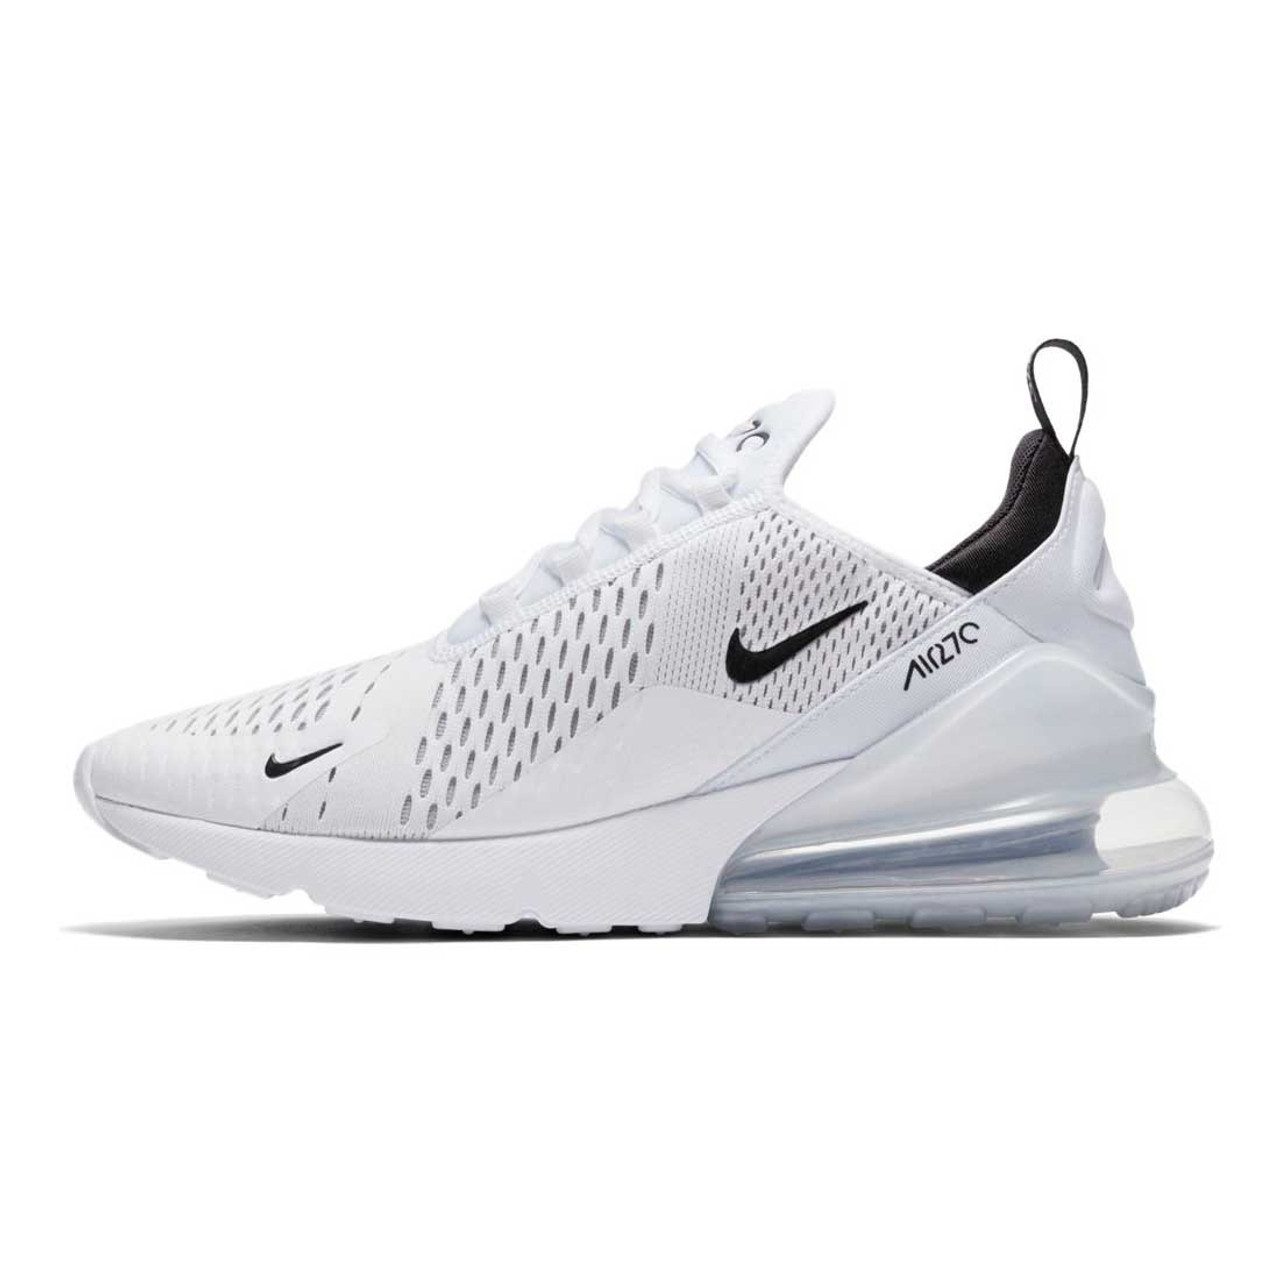 Nike Men's White/Black Air Max Shoes $ 159.99 | TYLER'S